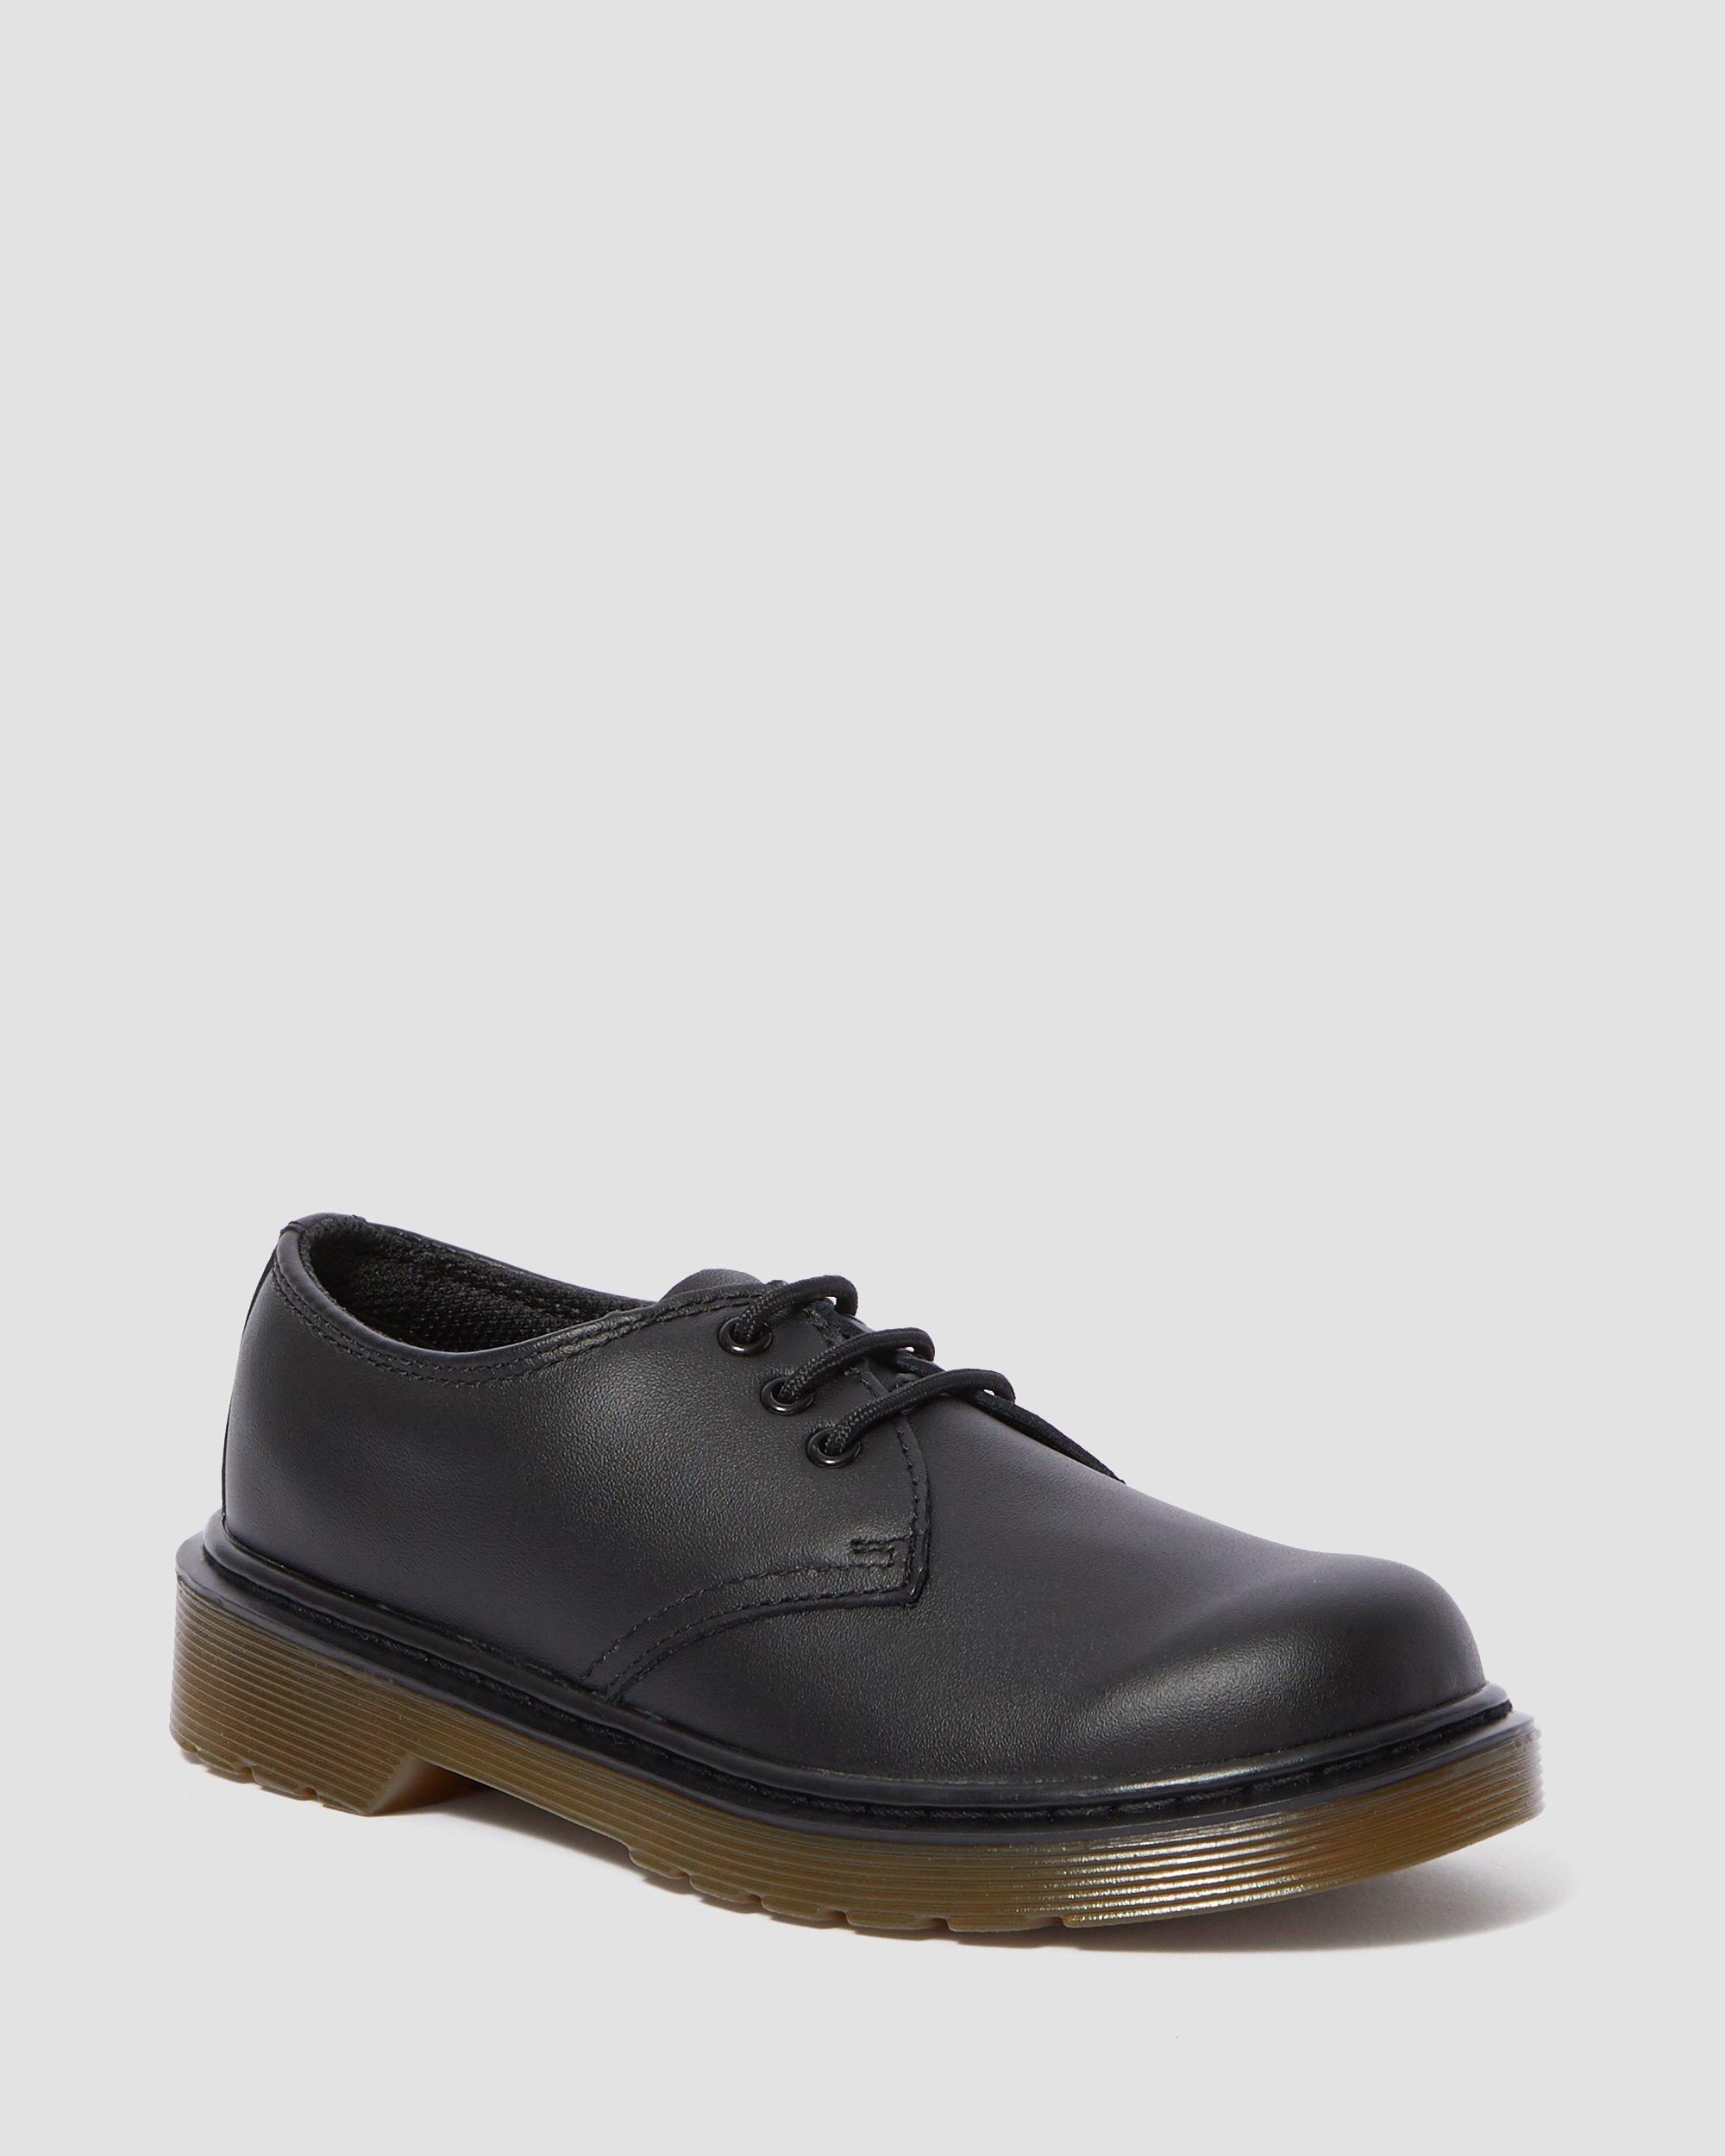 Martens EVERLEY Junior Softy T Leather Oxford Schuhe in schwarz uk13 eu32 Dr 